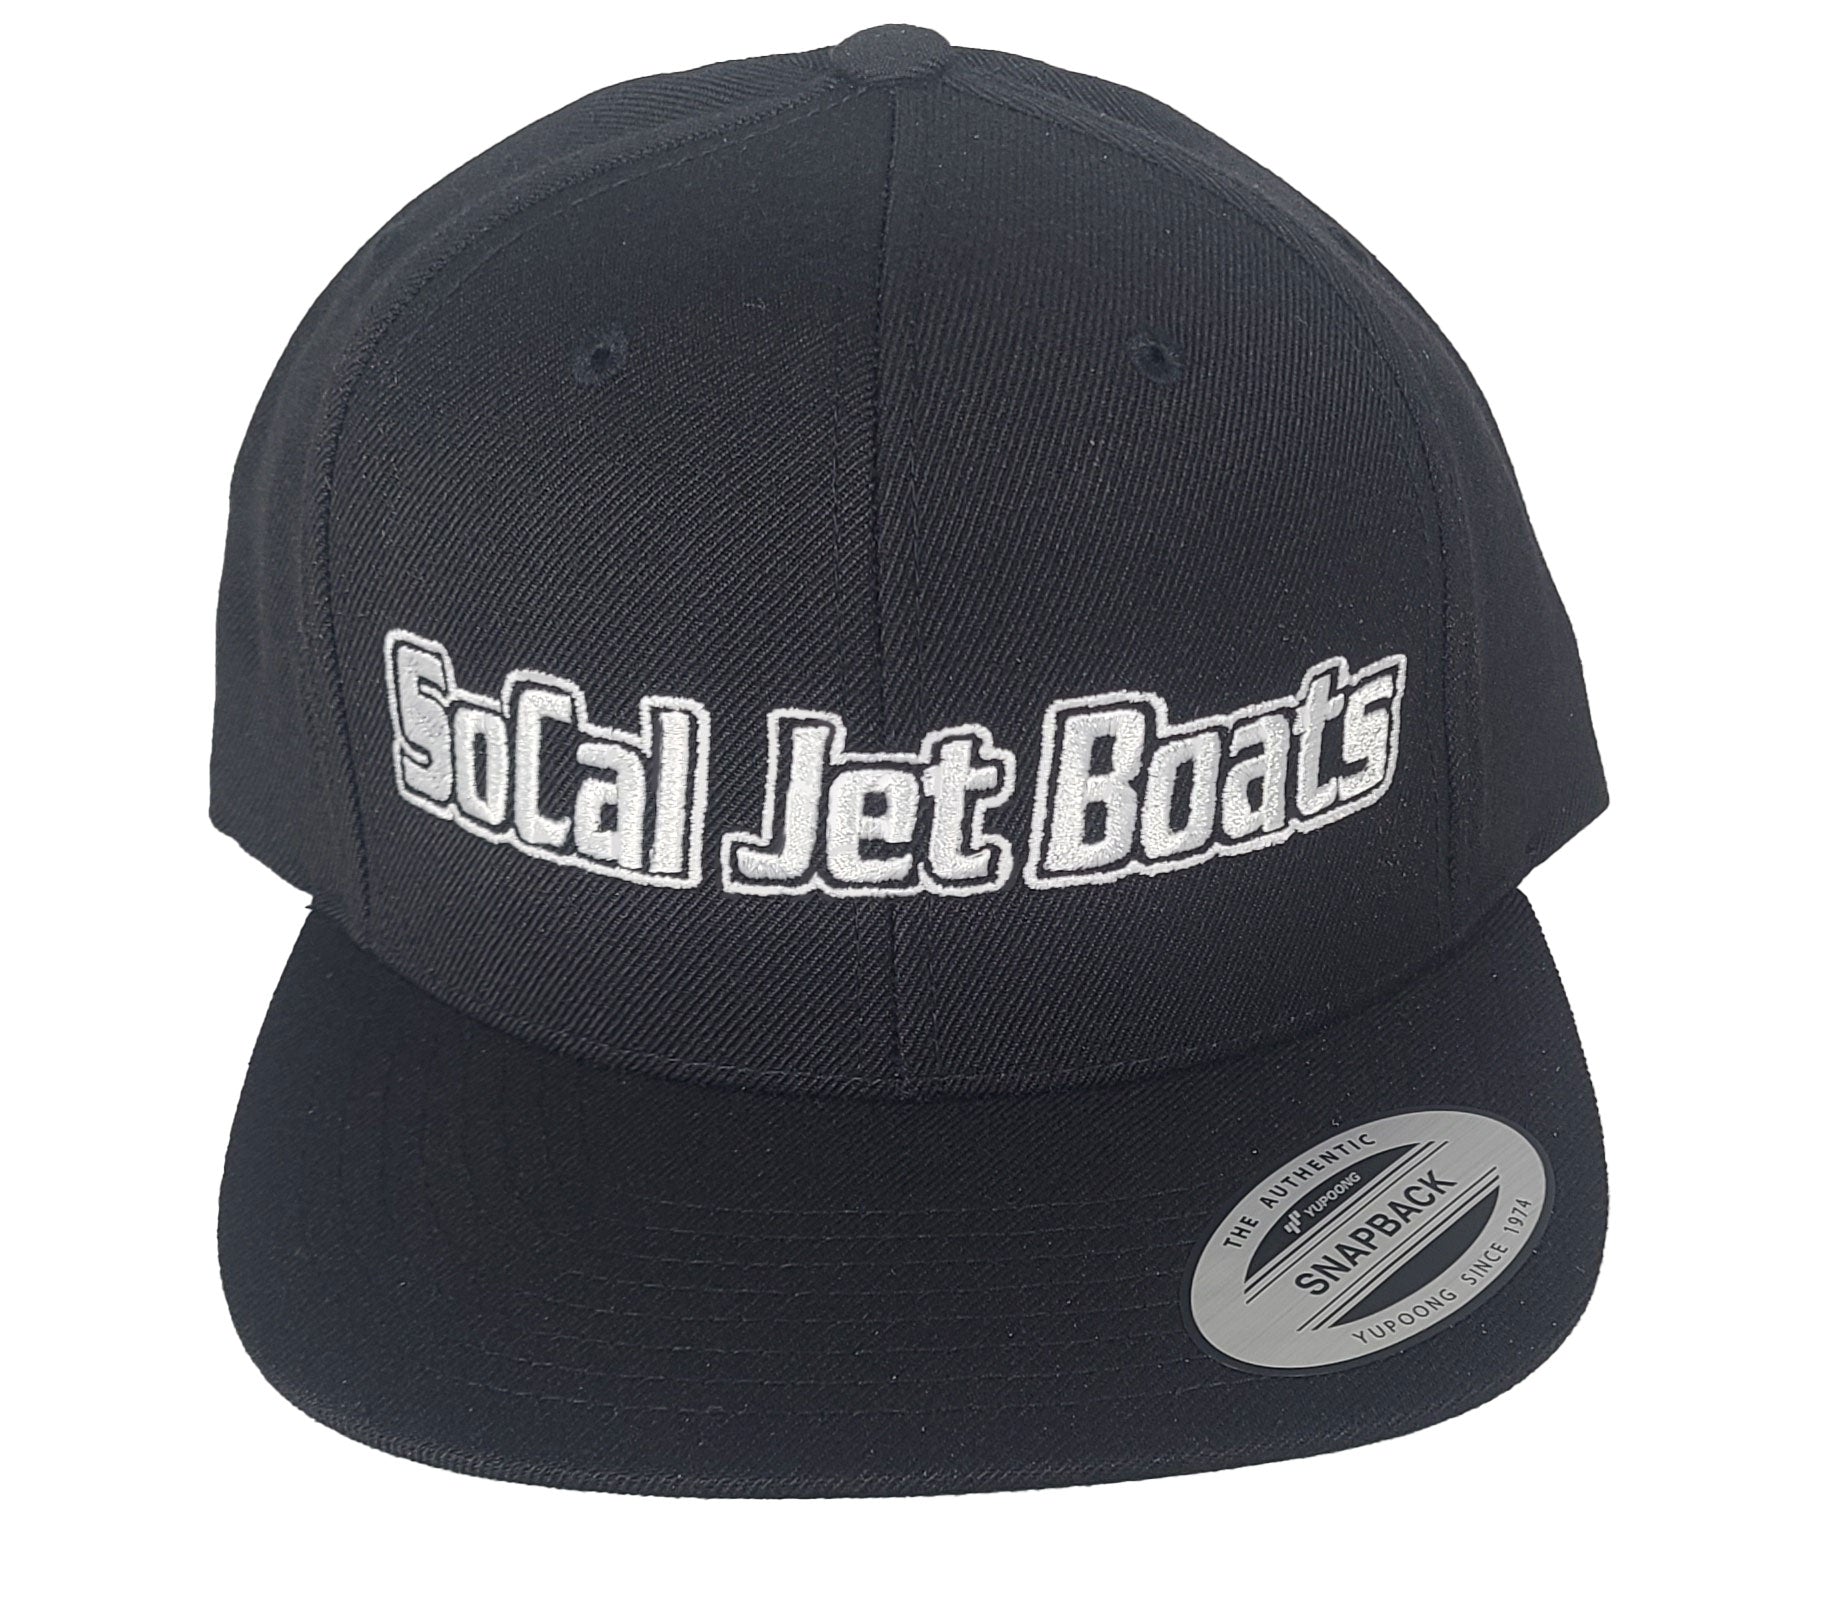 SoCal Jet Boats Black Snapback with White Stitching